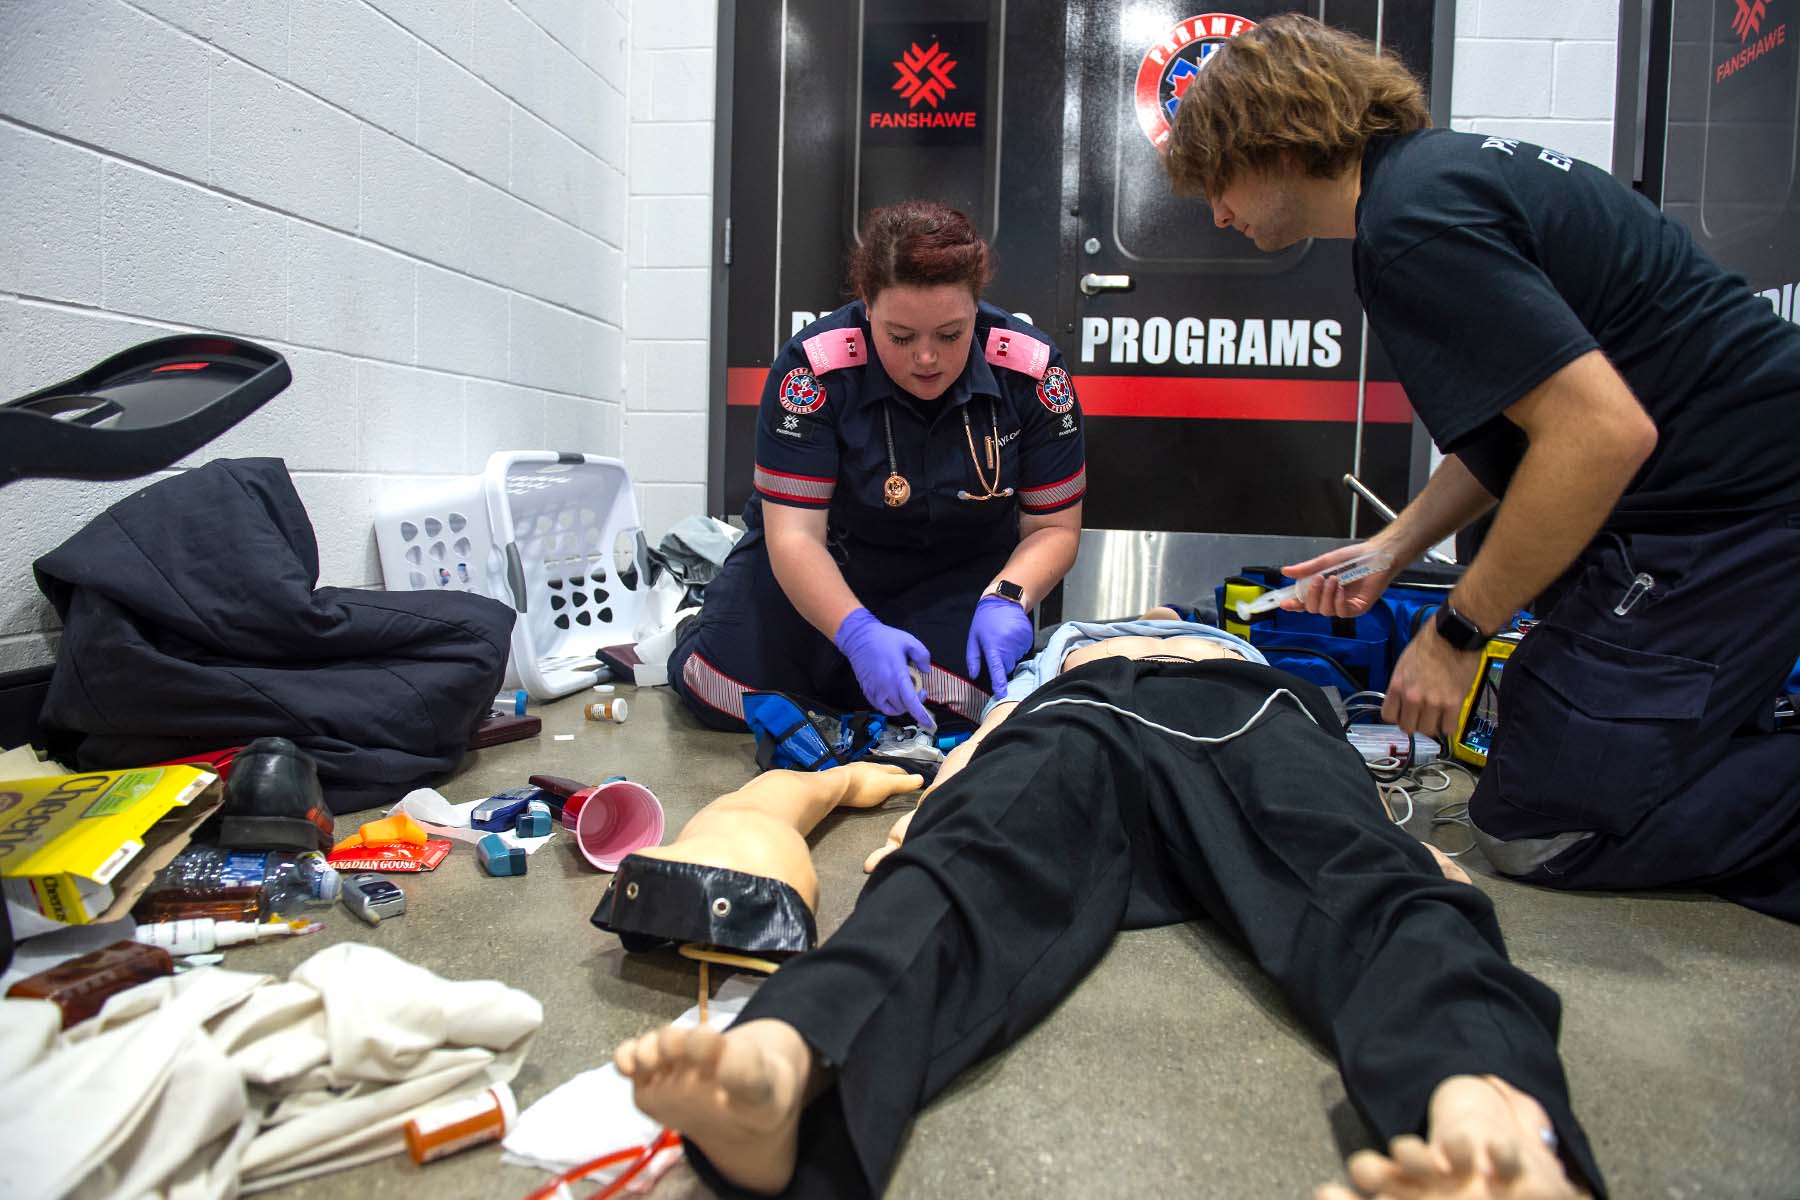 Paramedic student providing service under instruction